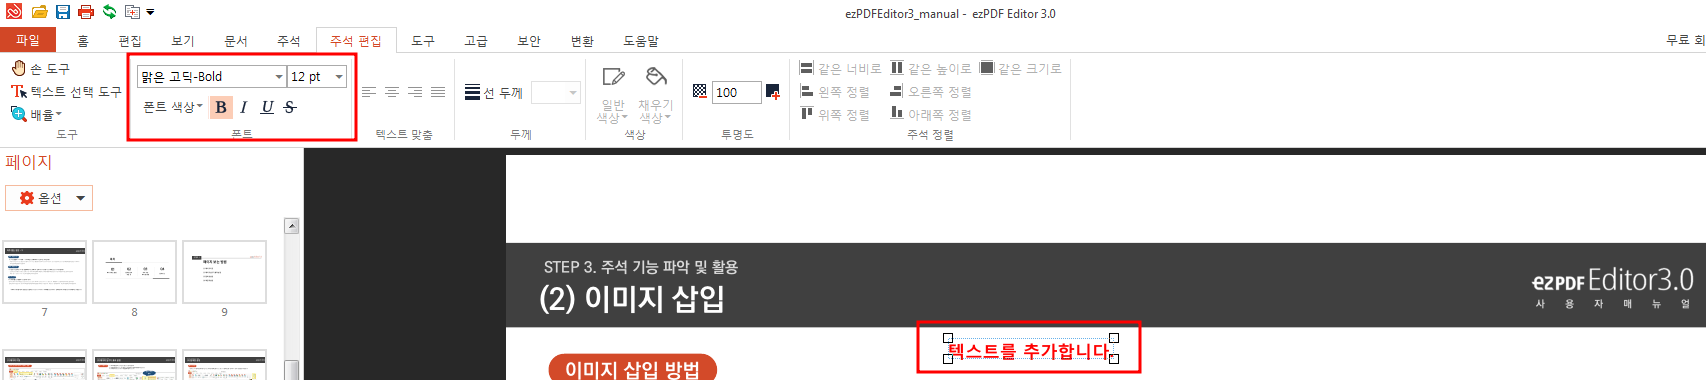 ezPDF Editor 3.0 사용법